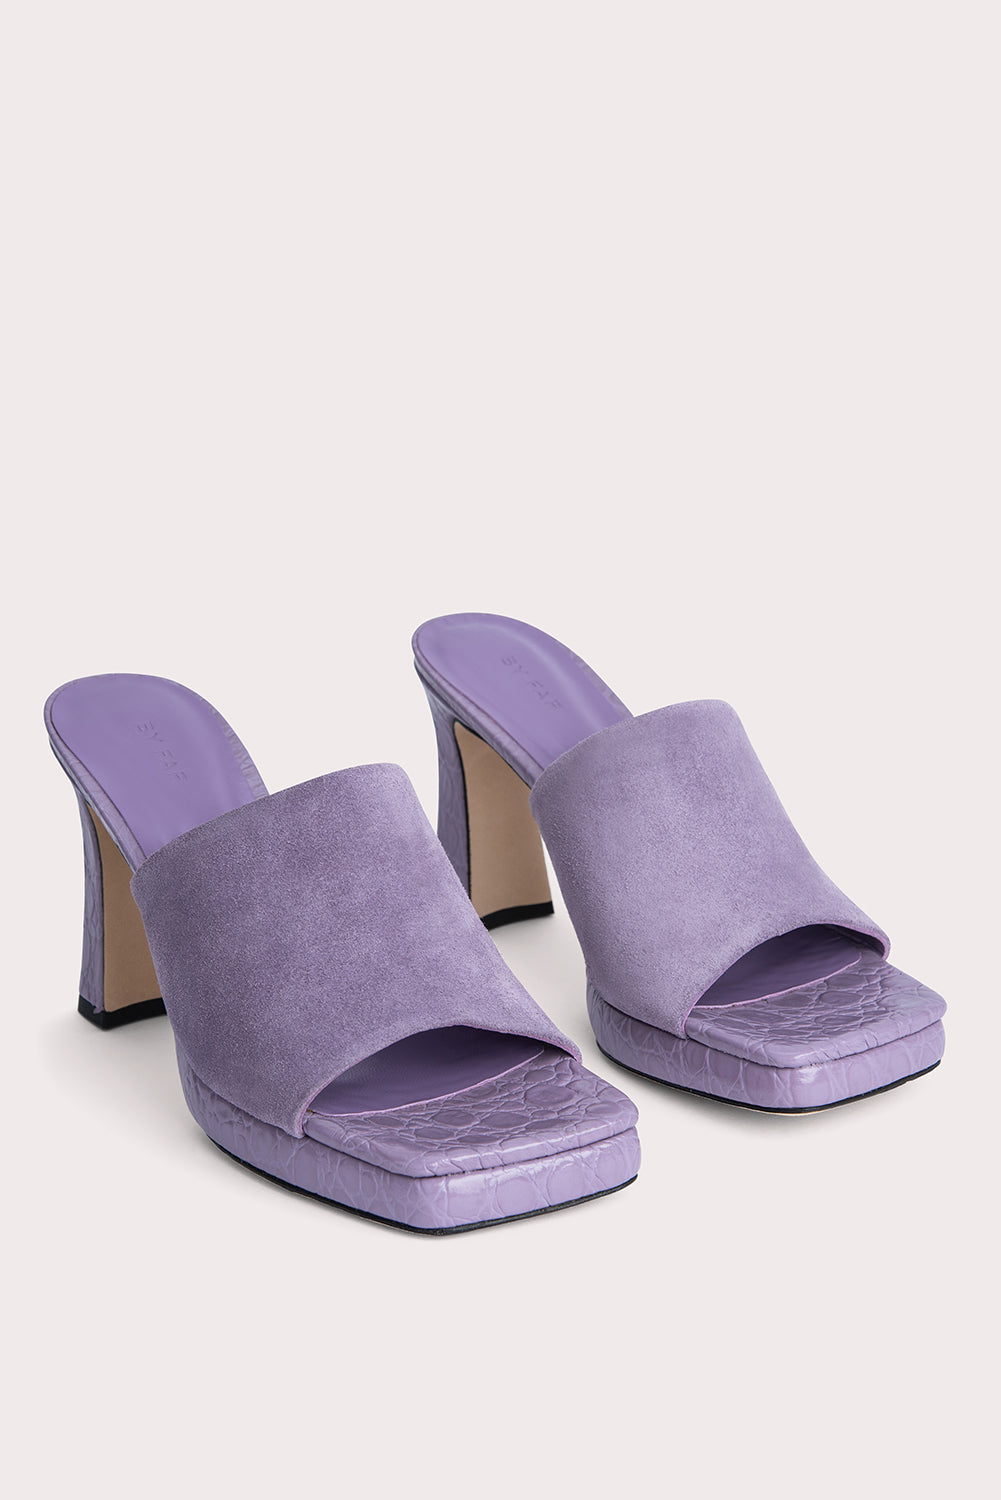 Beliz Purple Haze Croco and Suede Leather